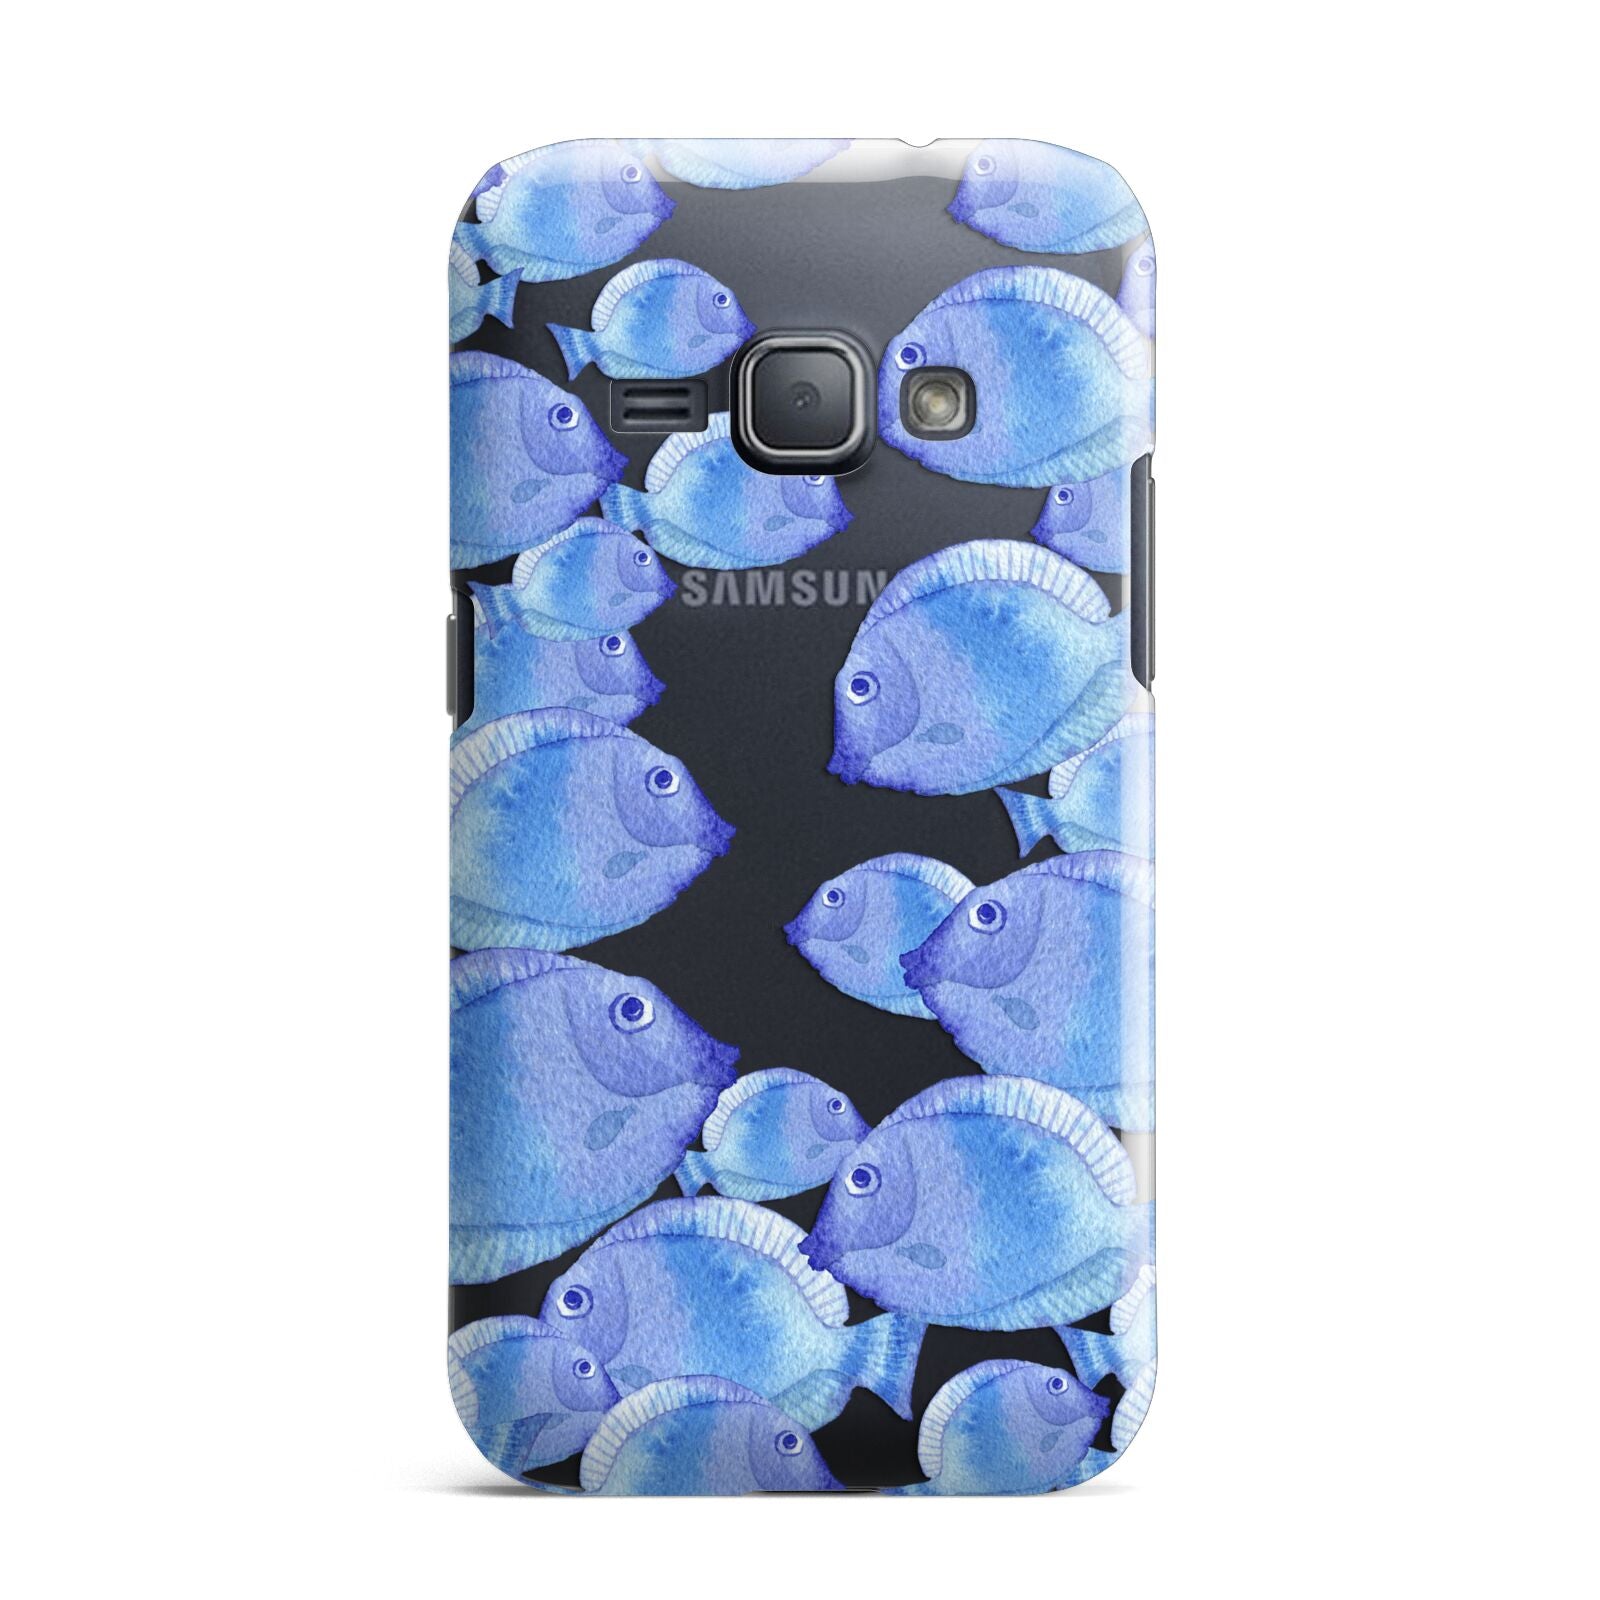 Fish Samsung Galaxy J1 2016 Case